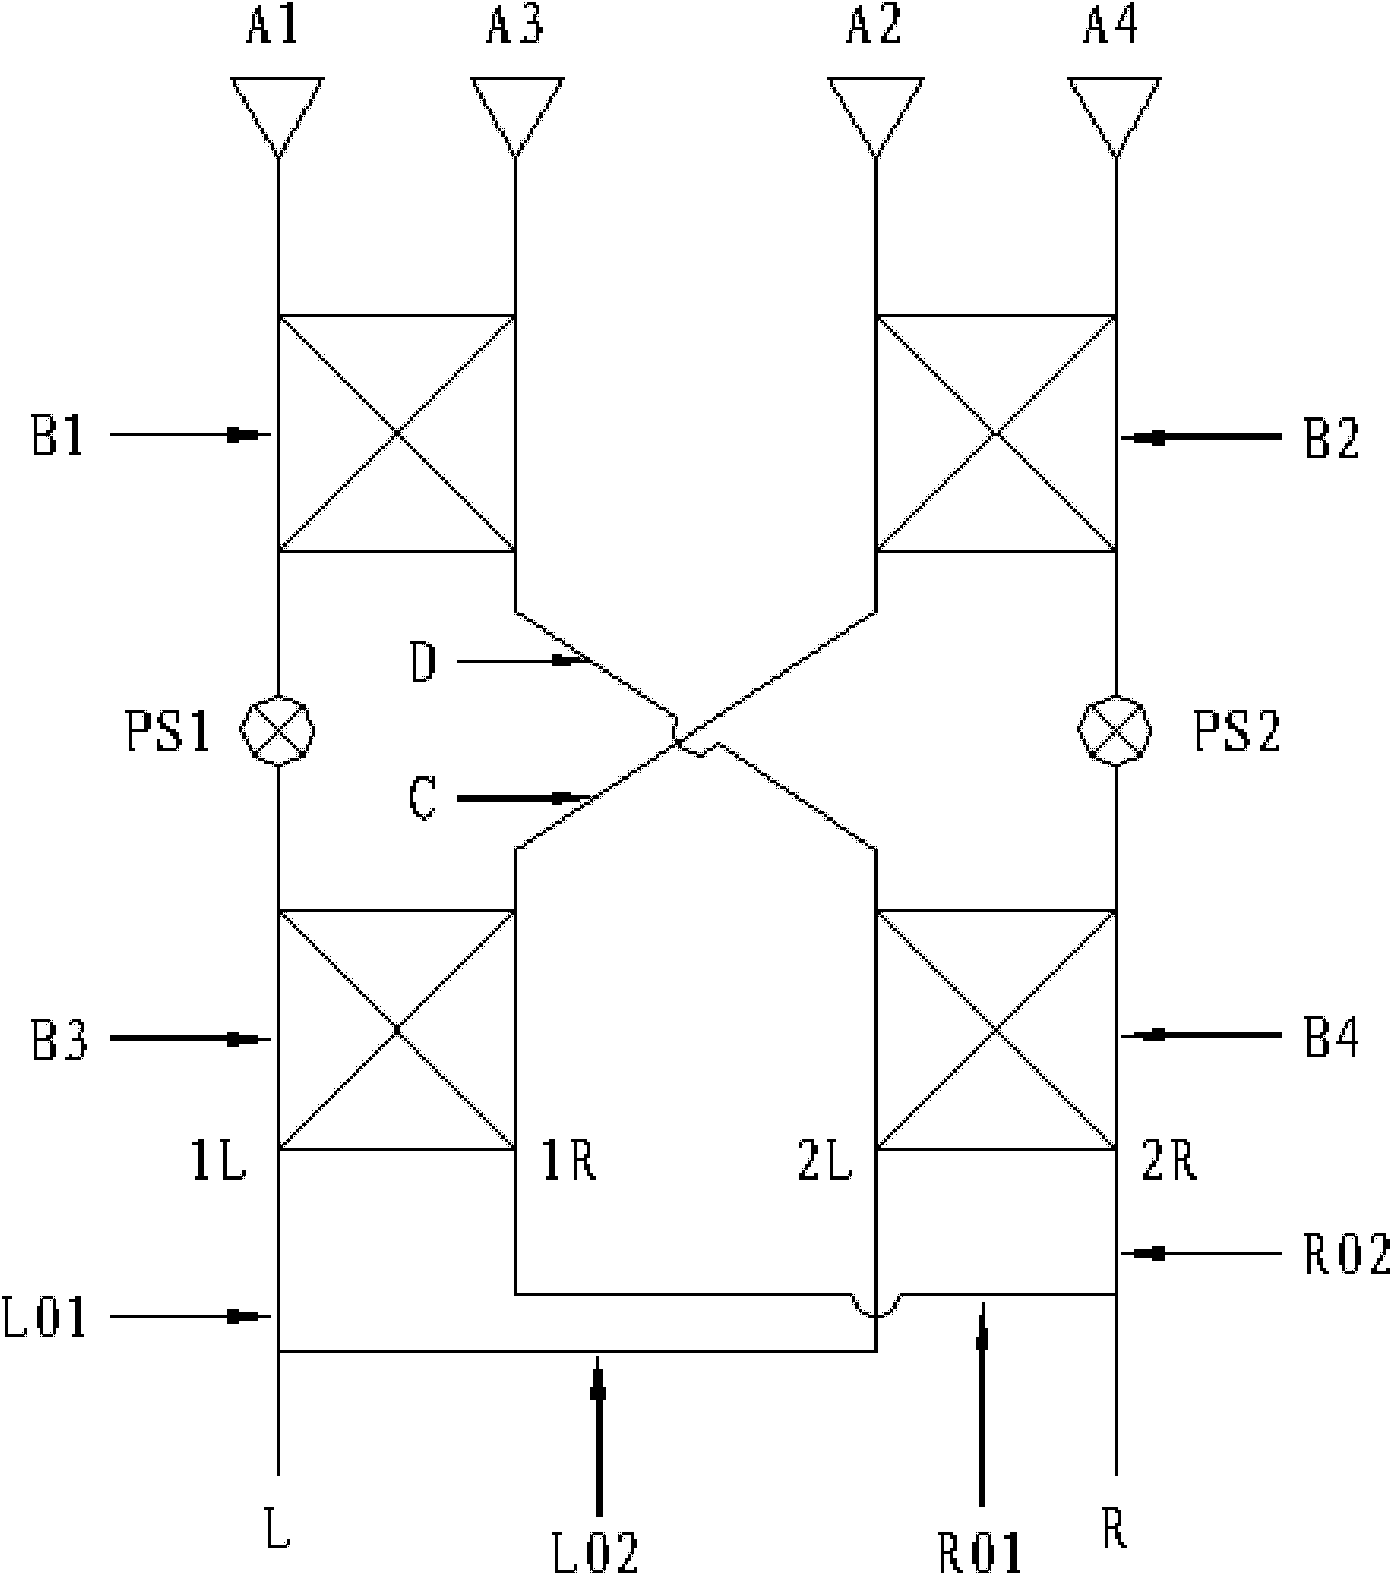 Electric tilt antenna and base station